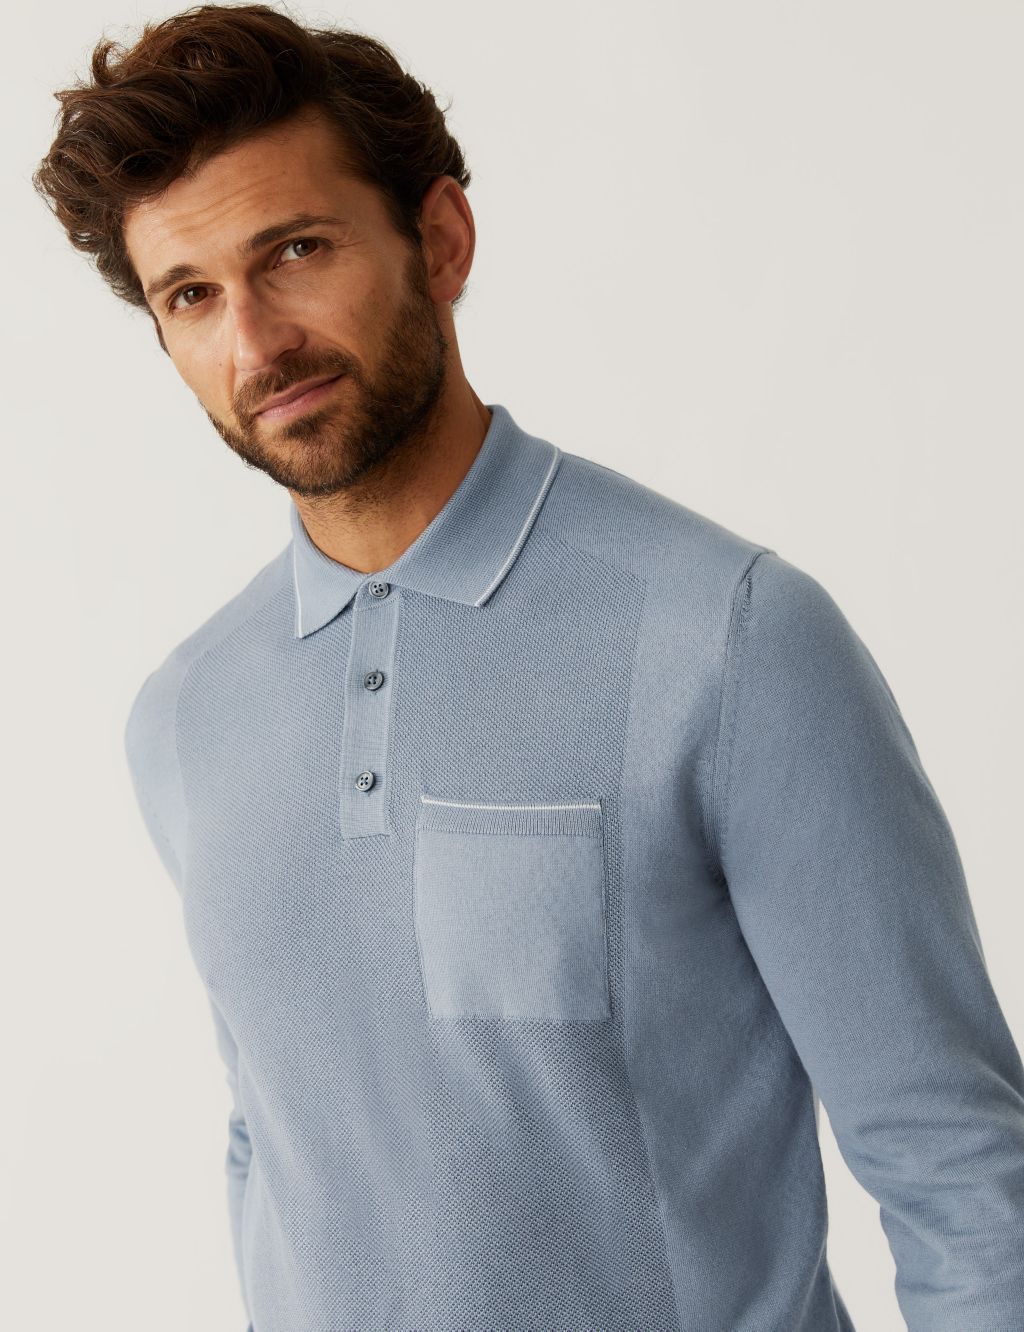 Cotton Blend Textured Polo Shirt image 2